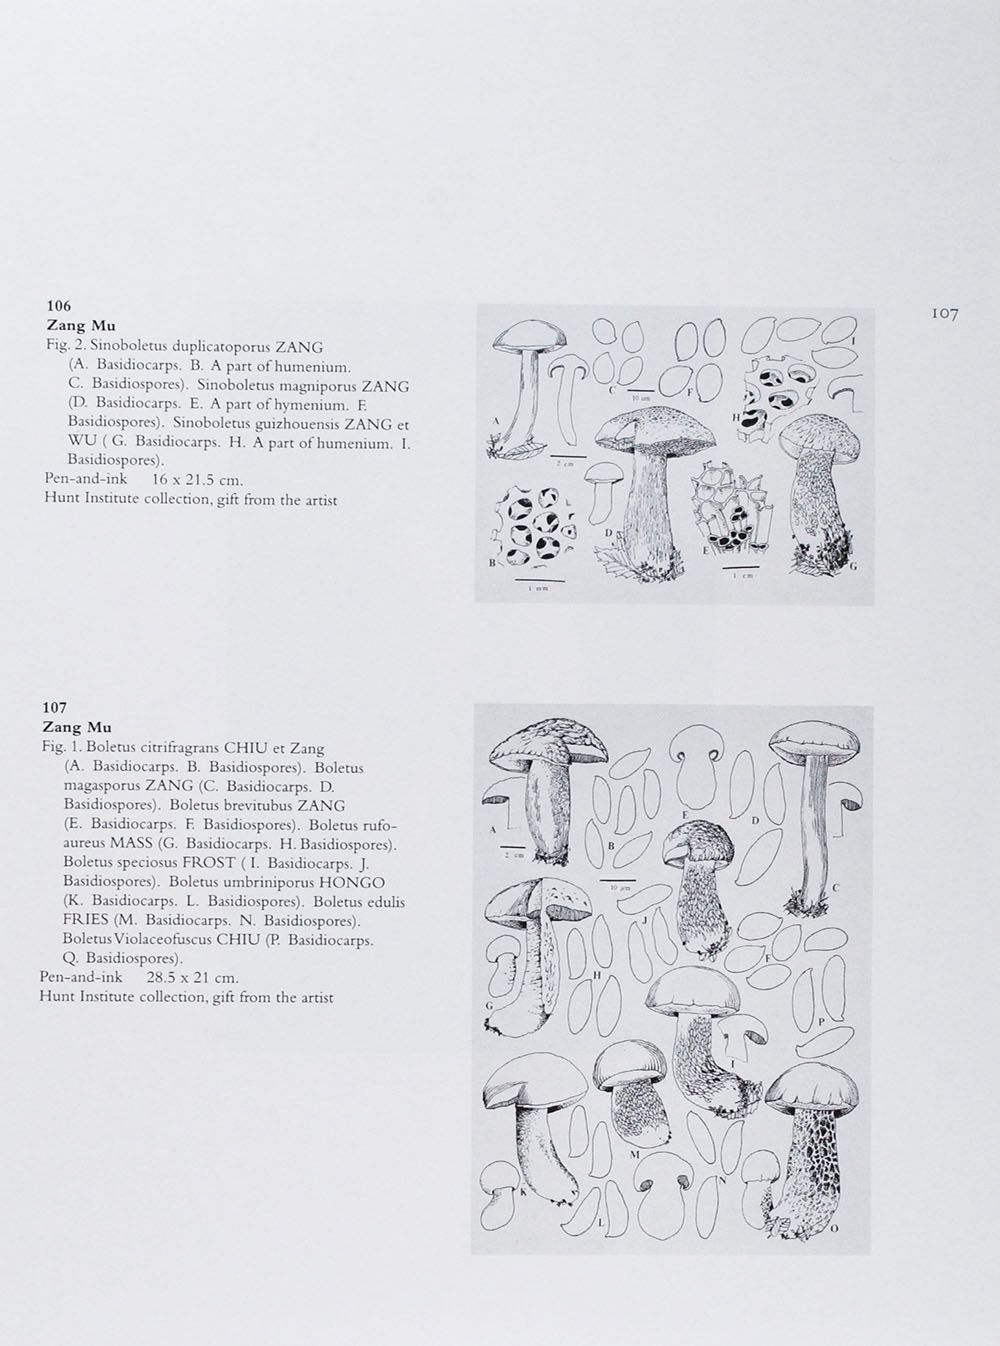 Zang Mu Catalogue Of The International Exhibition Of Botanical Art Illustration